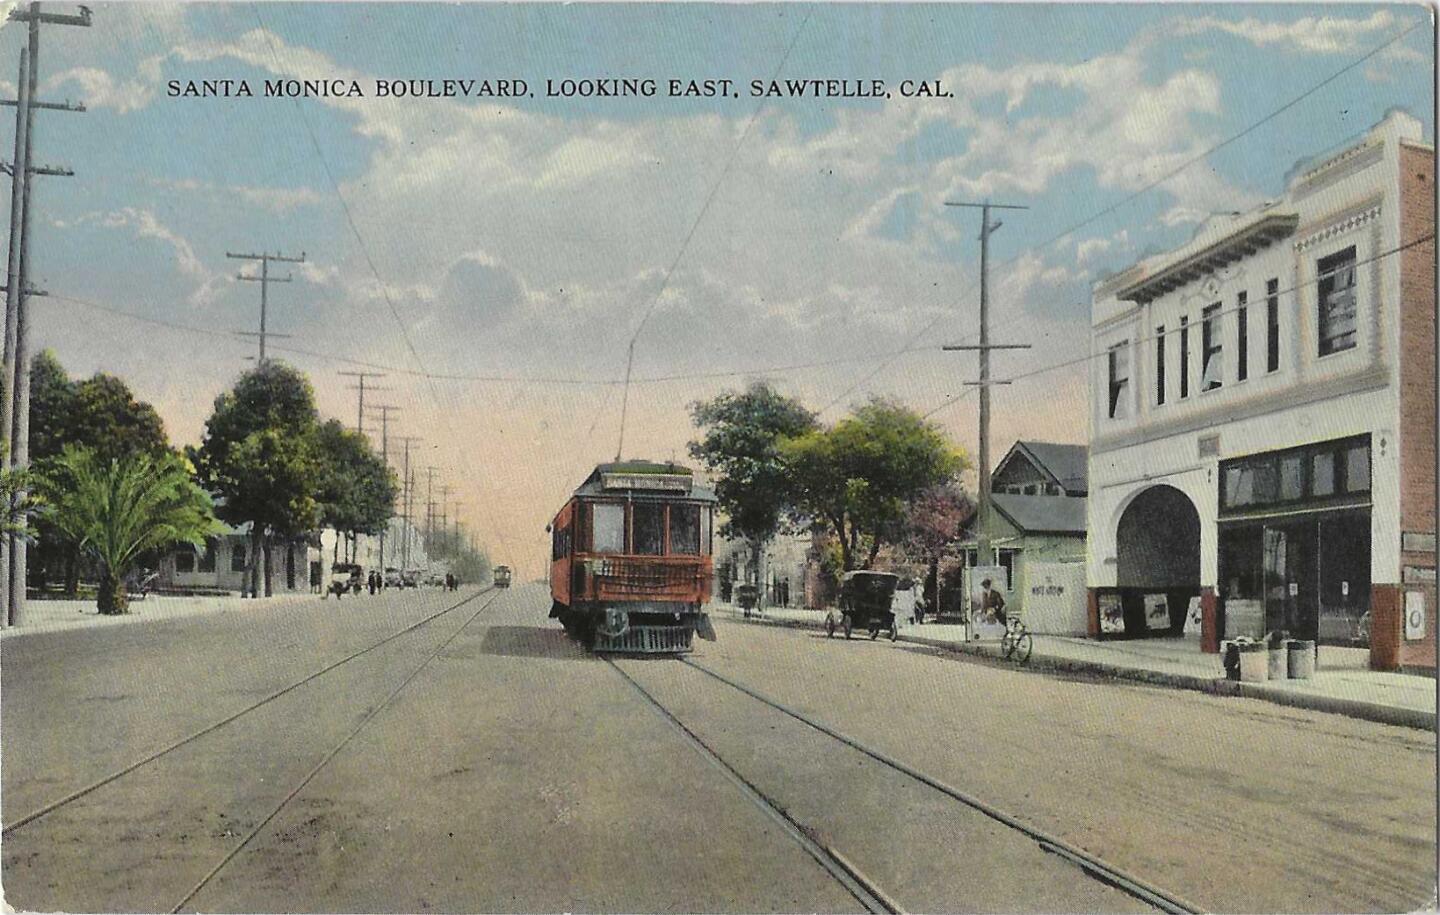 A streetcar runs along Santa Monica Boulevard in Sawtelle on this vintage postcard